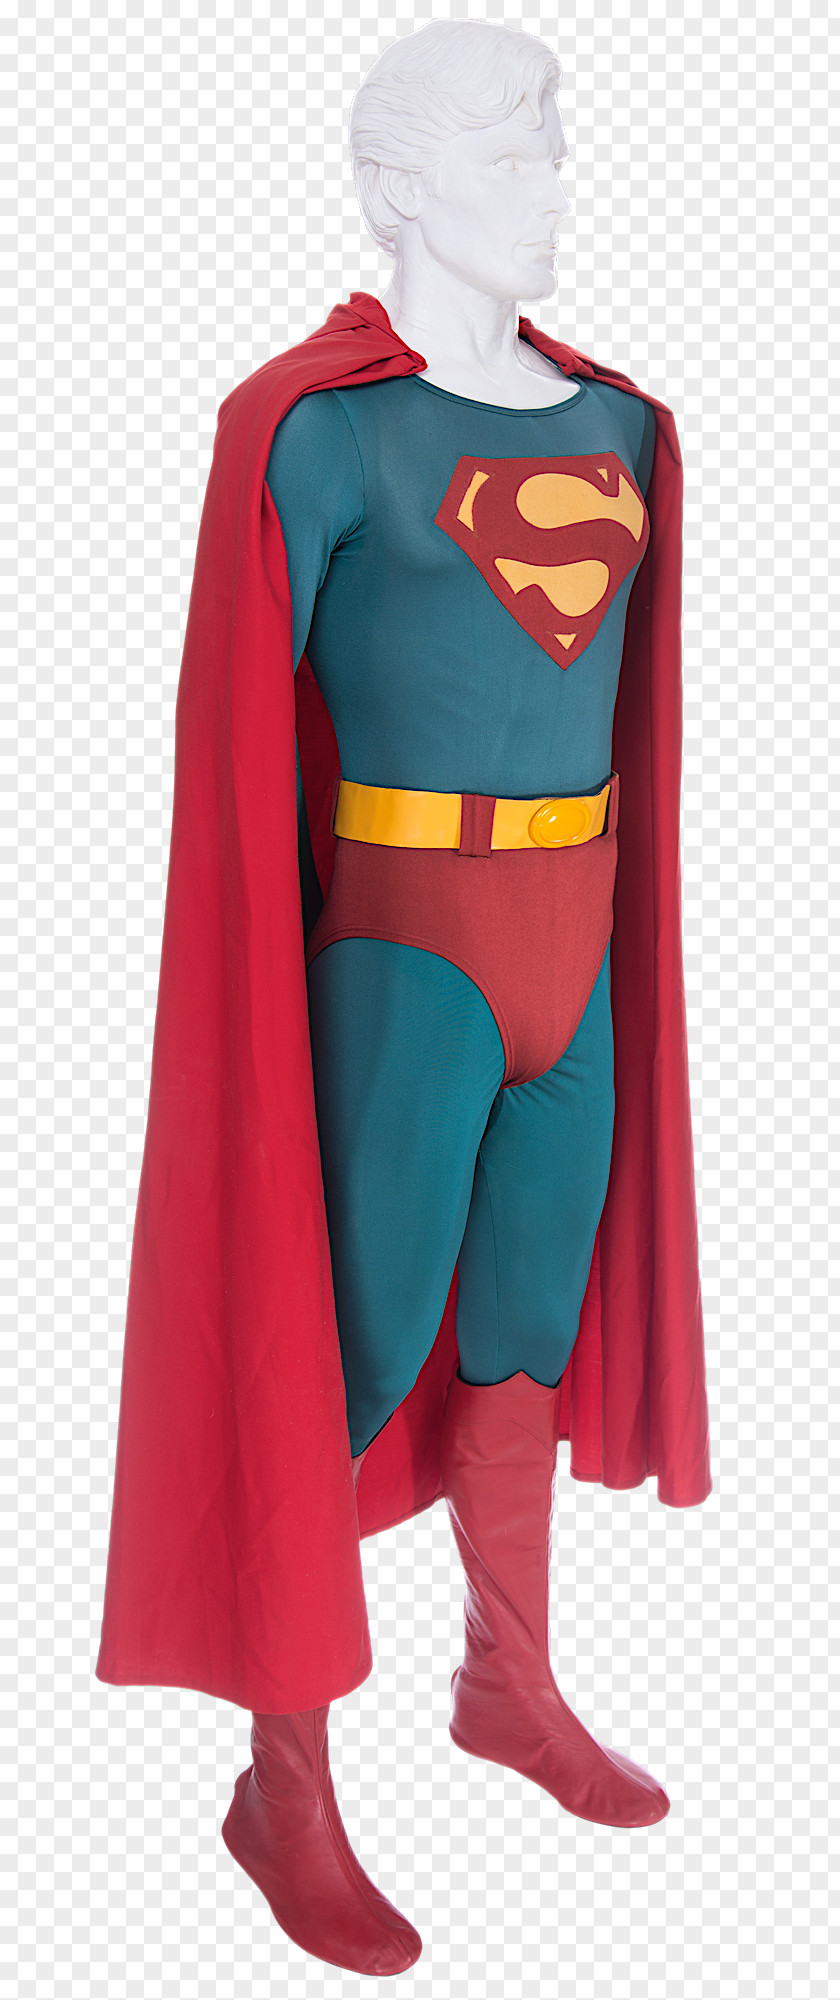 Christopher Reeve Costume Design Superman PNG